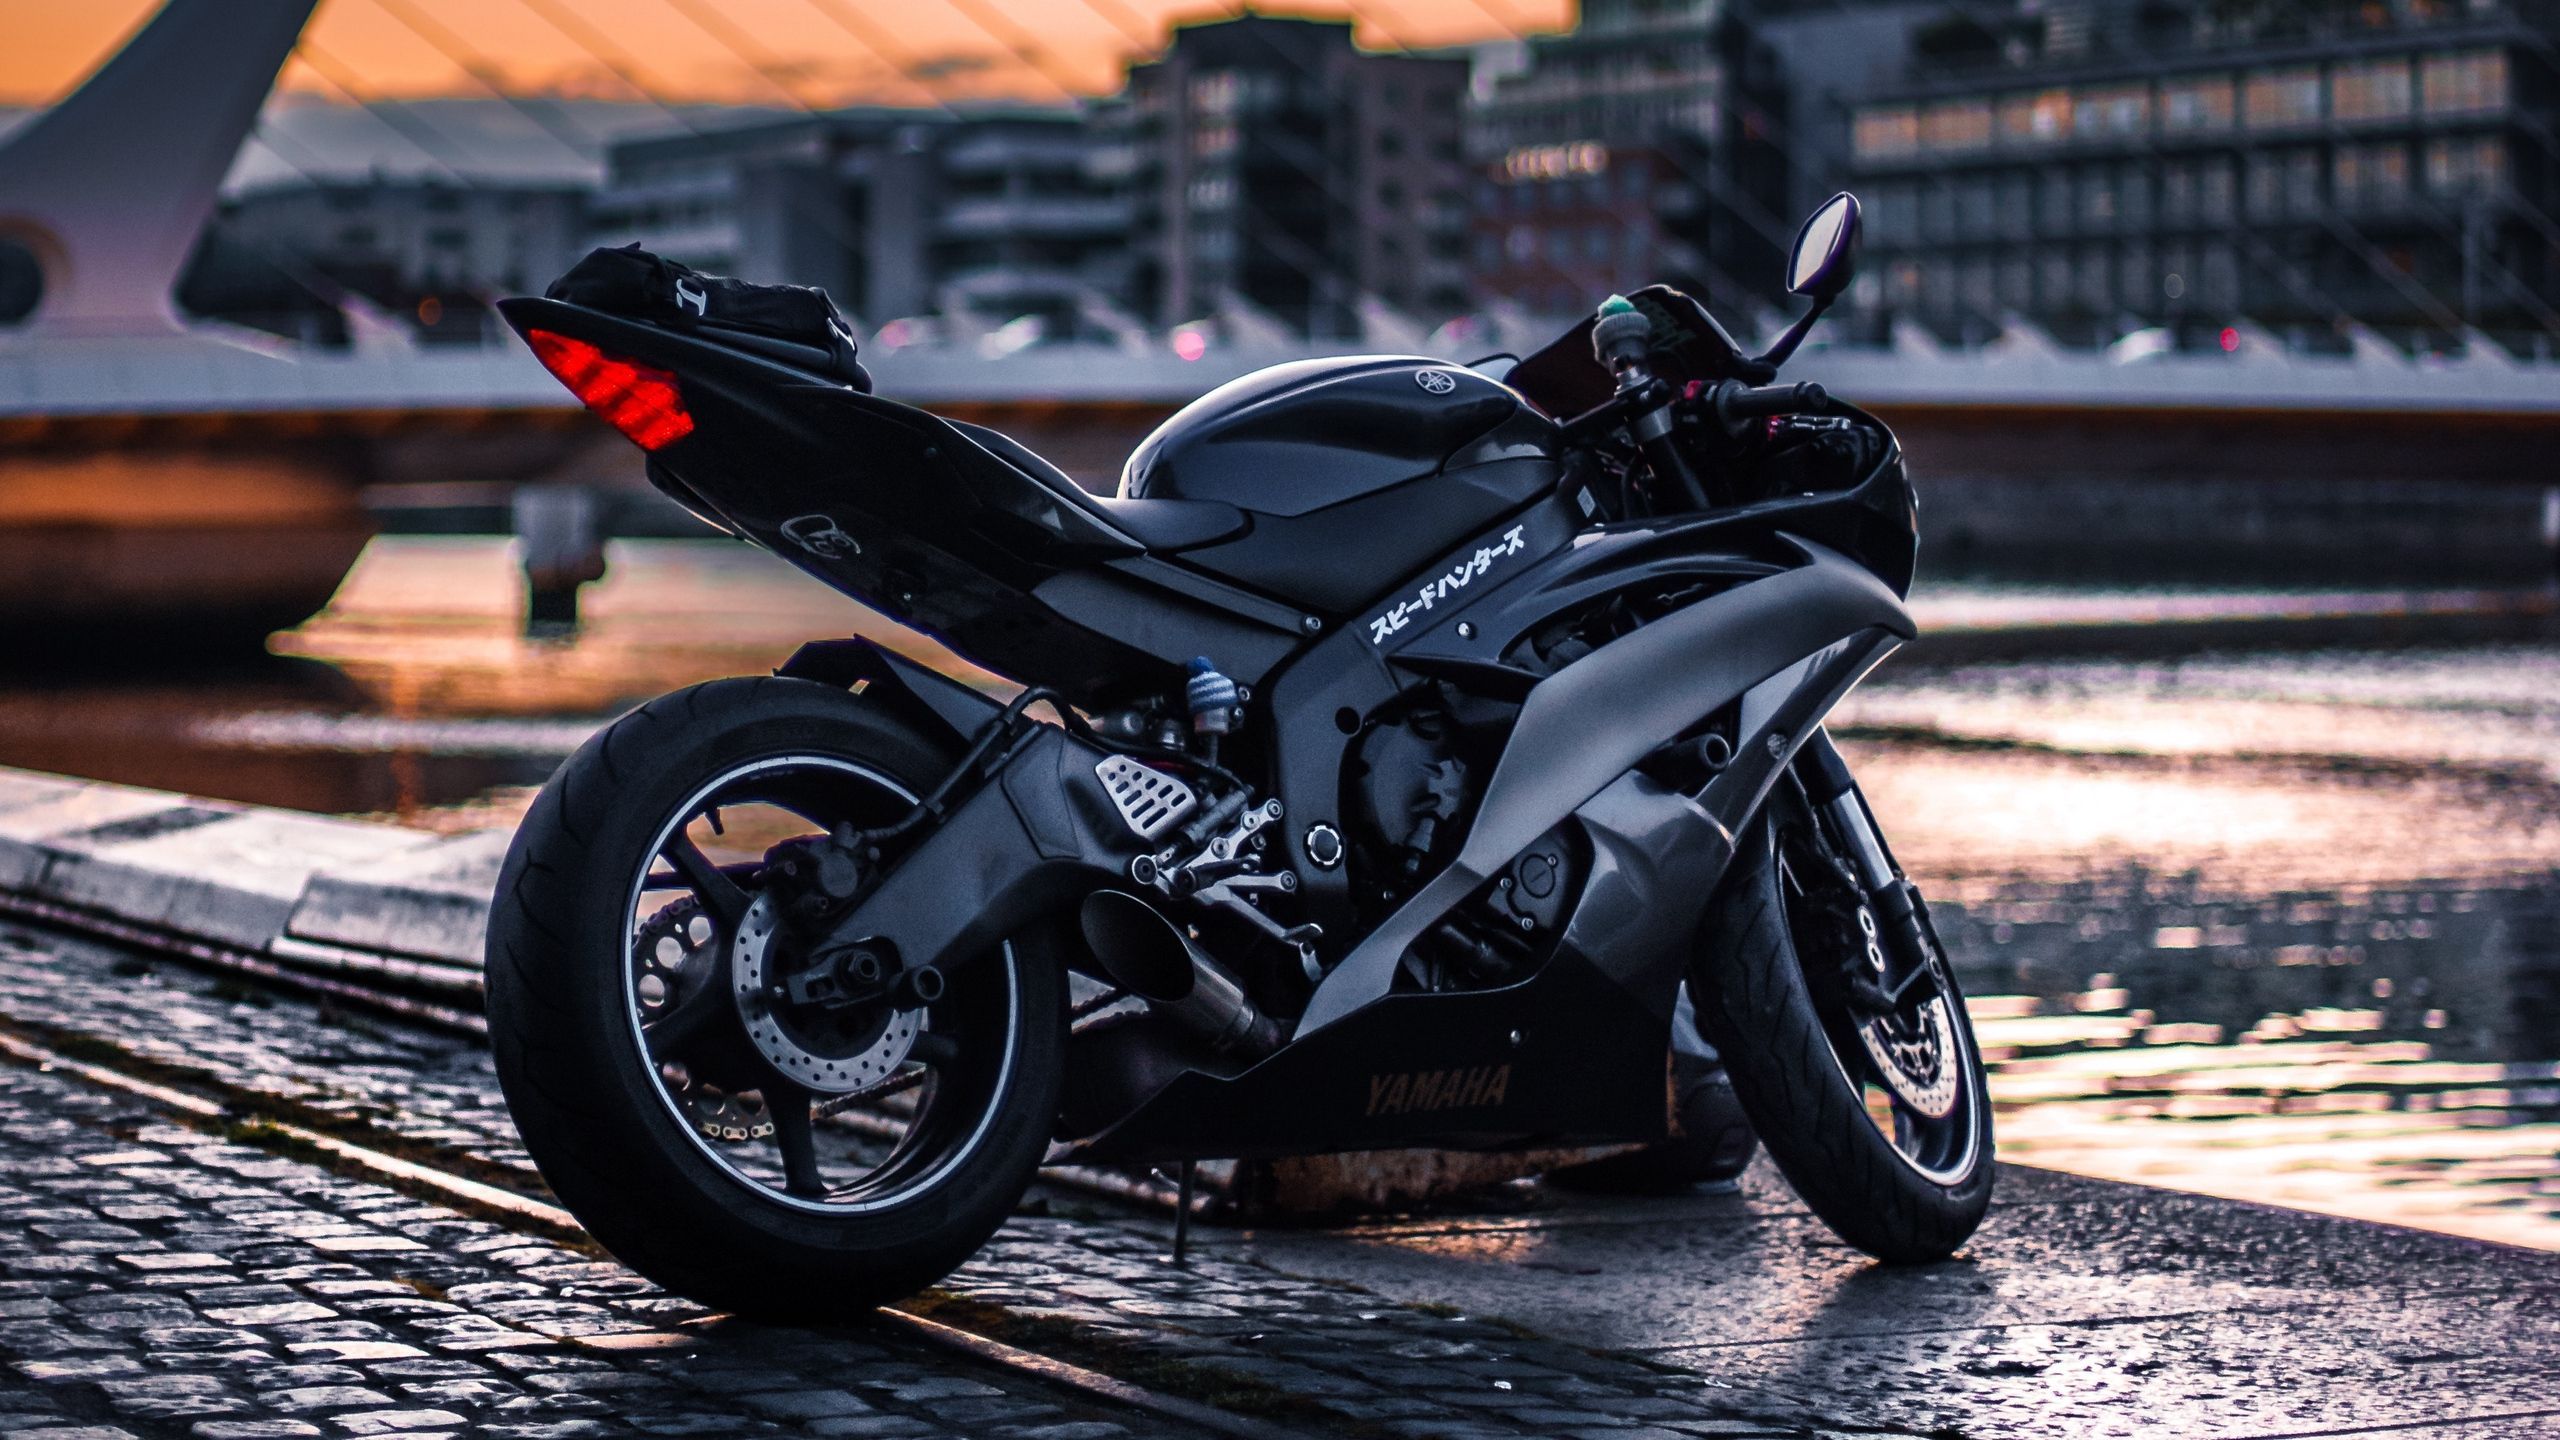  Motorrad Hintergrundbild 2560x1440. Motorcycle Background